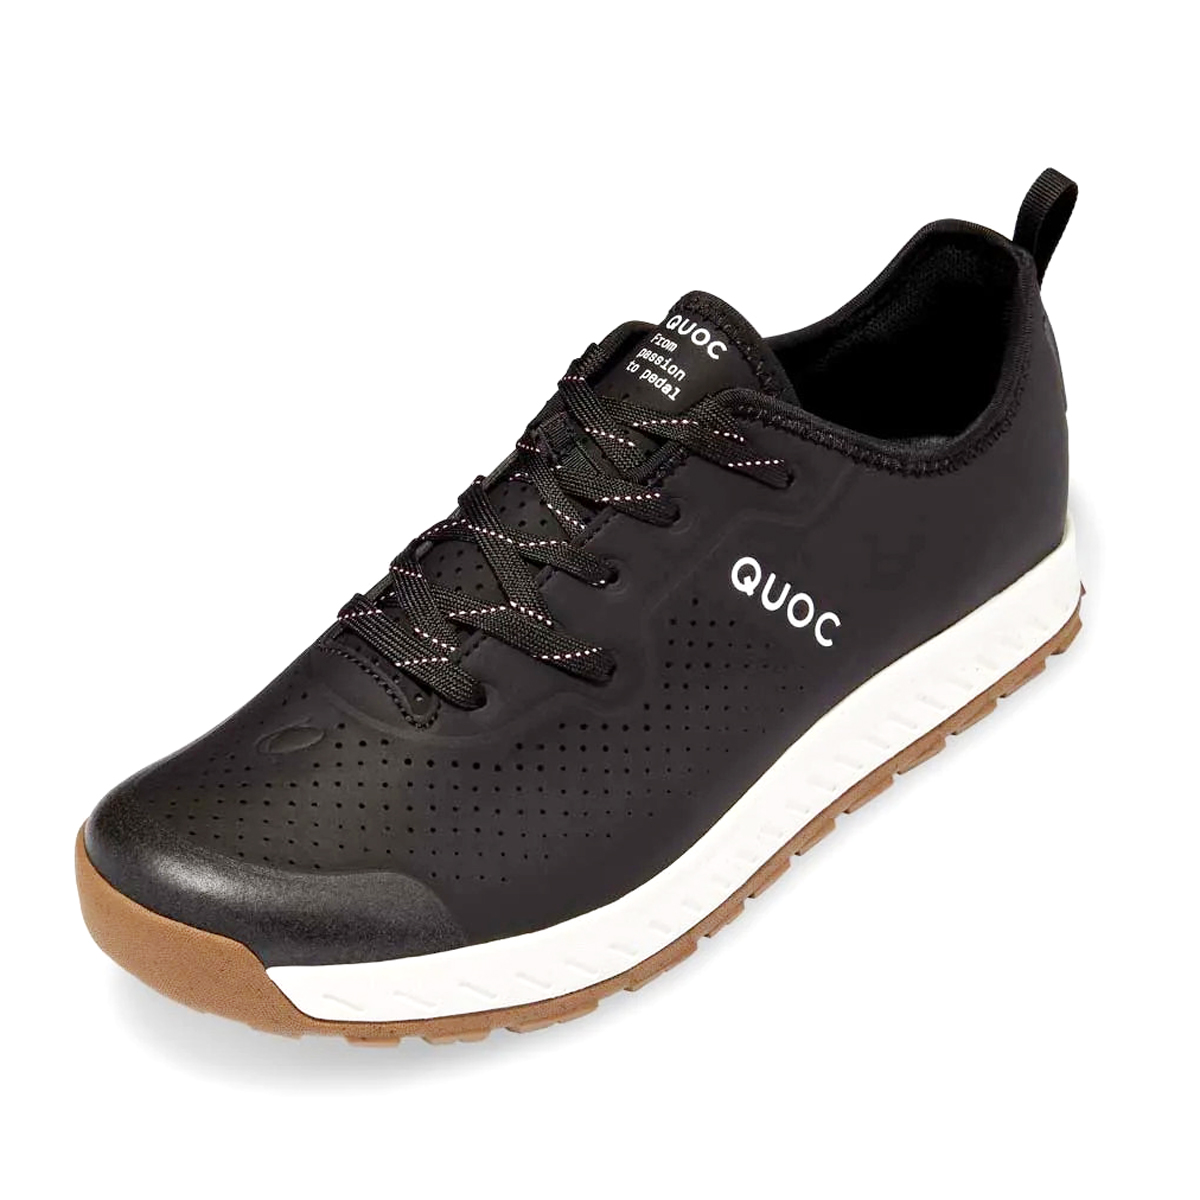 Productfoto van QUOC Weekend Cycling Sneaker - black/white